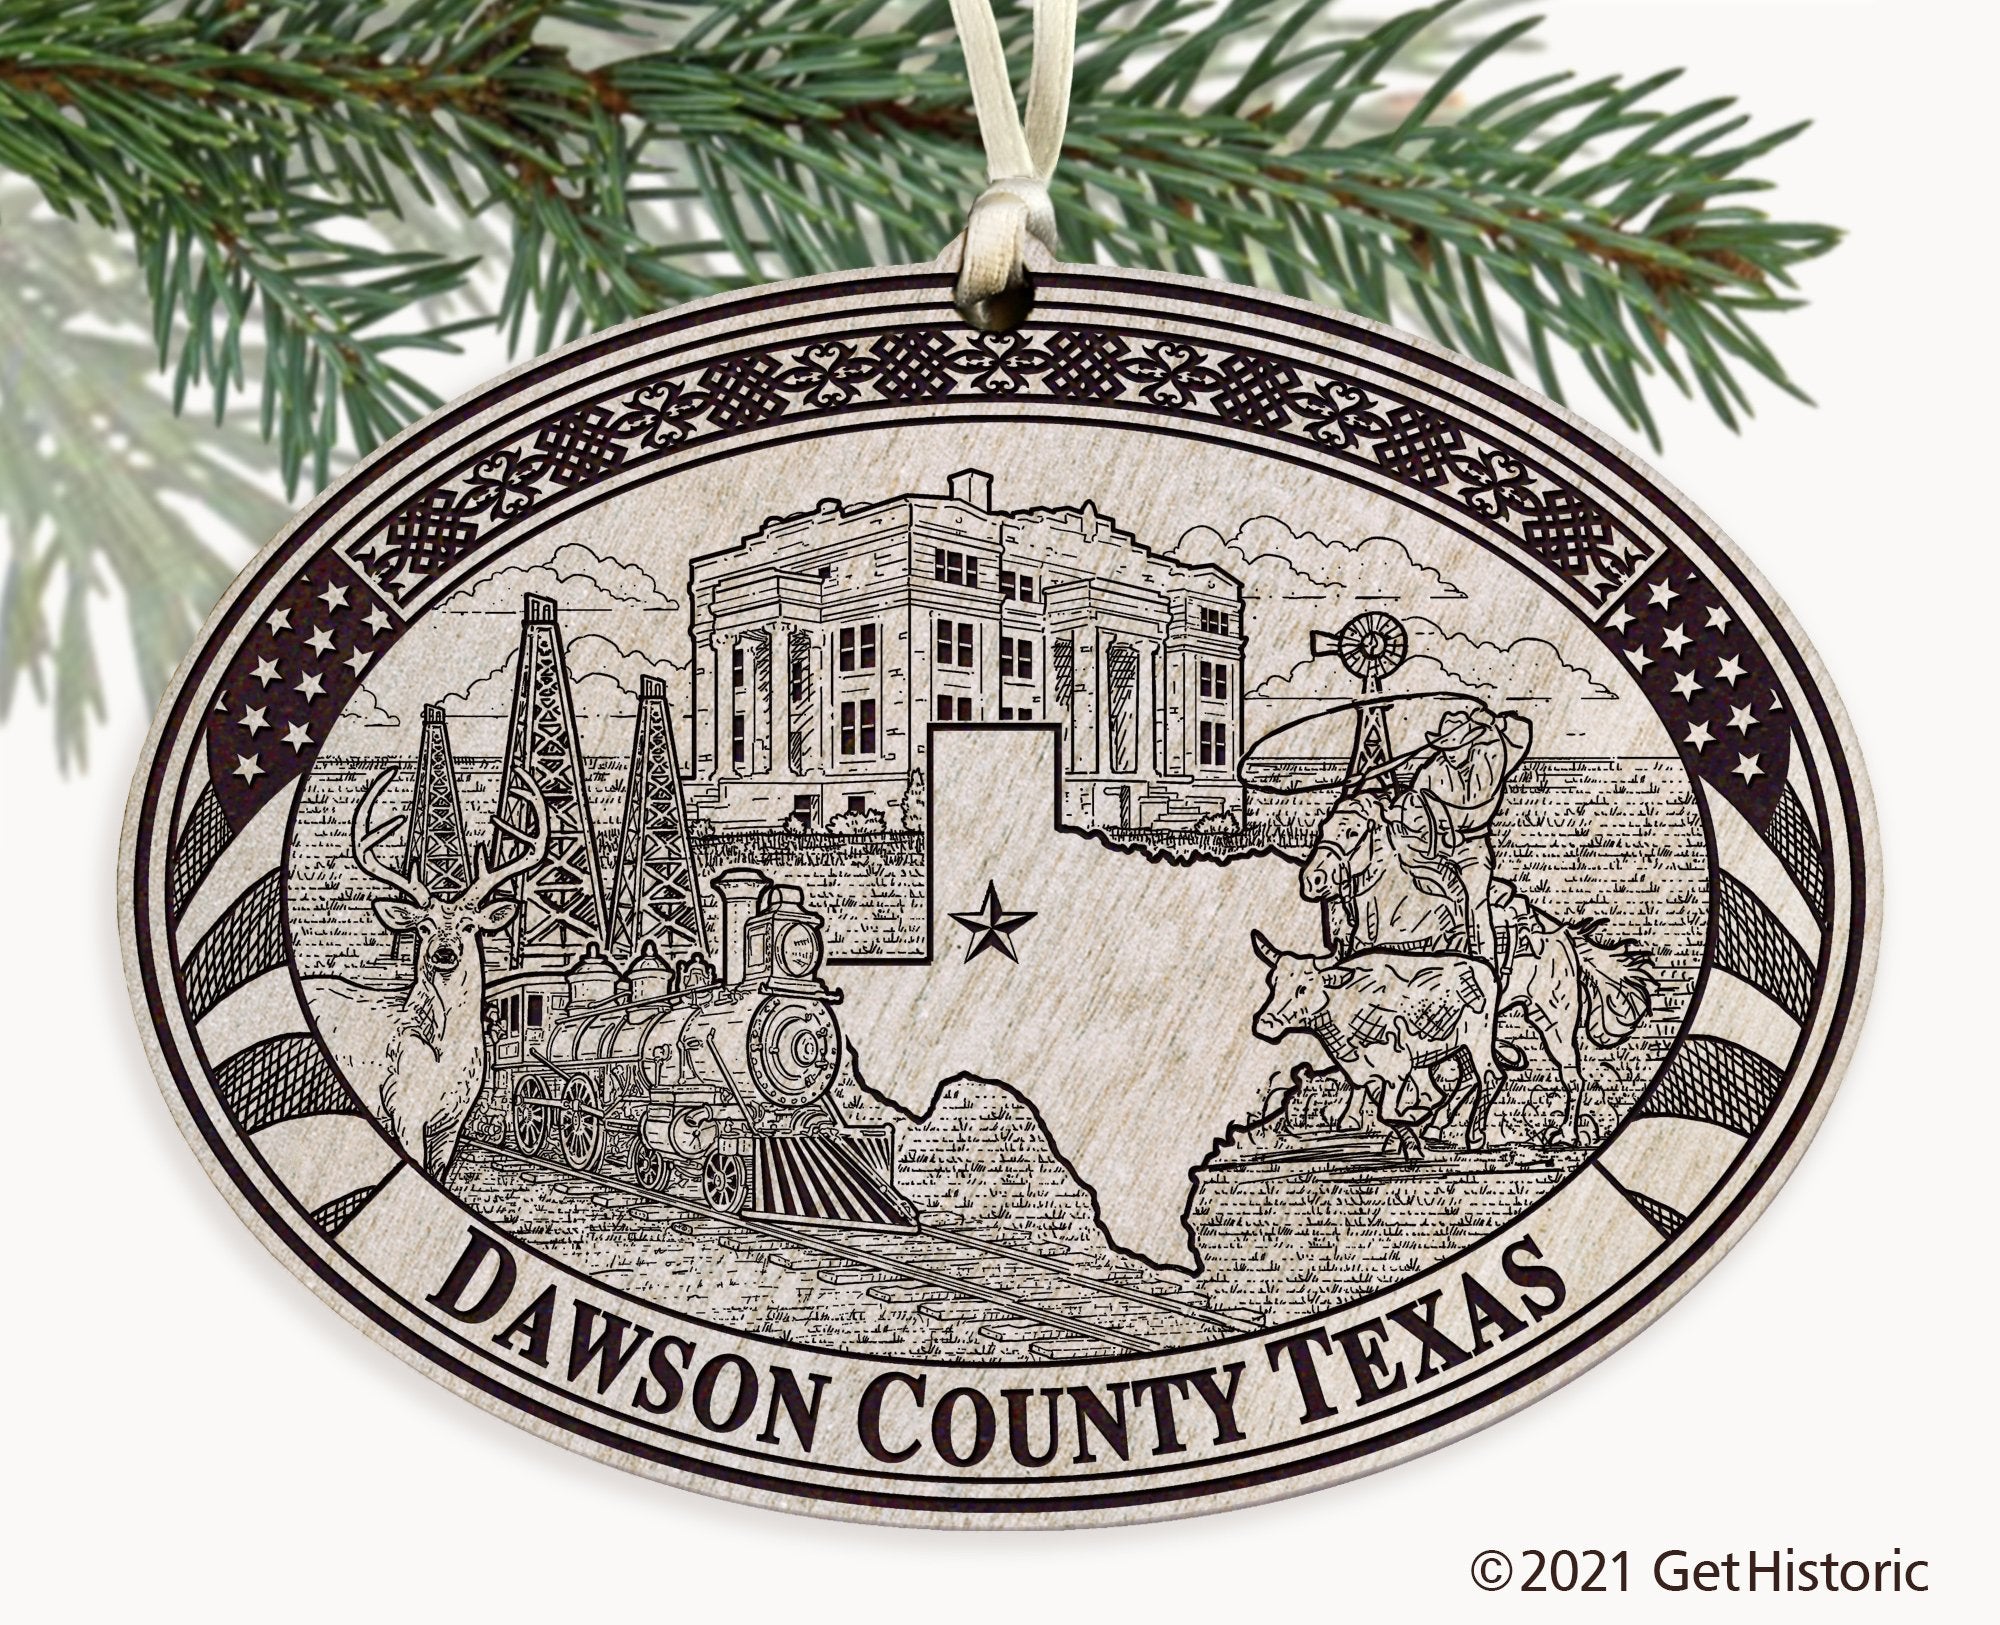 Dawson County Texas Engraved Ornament